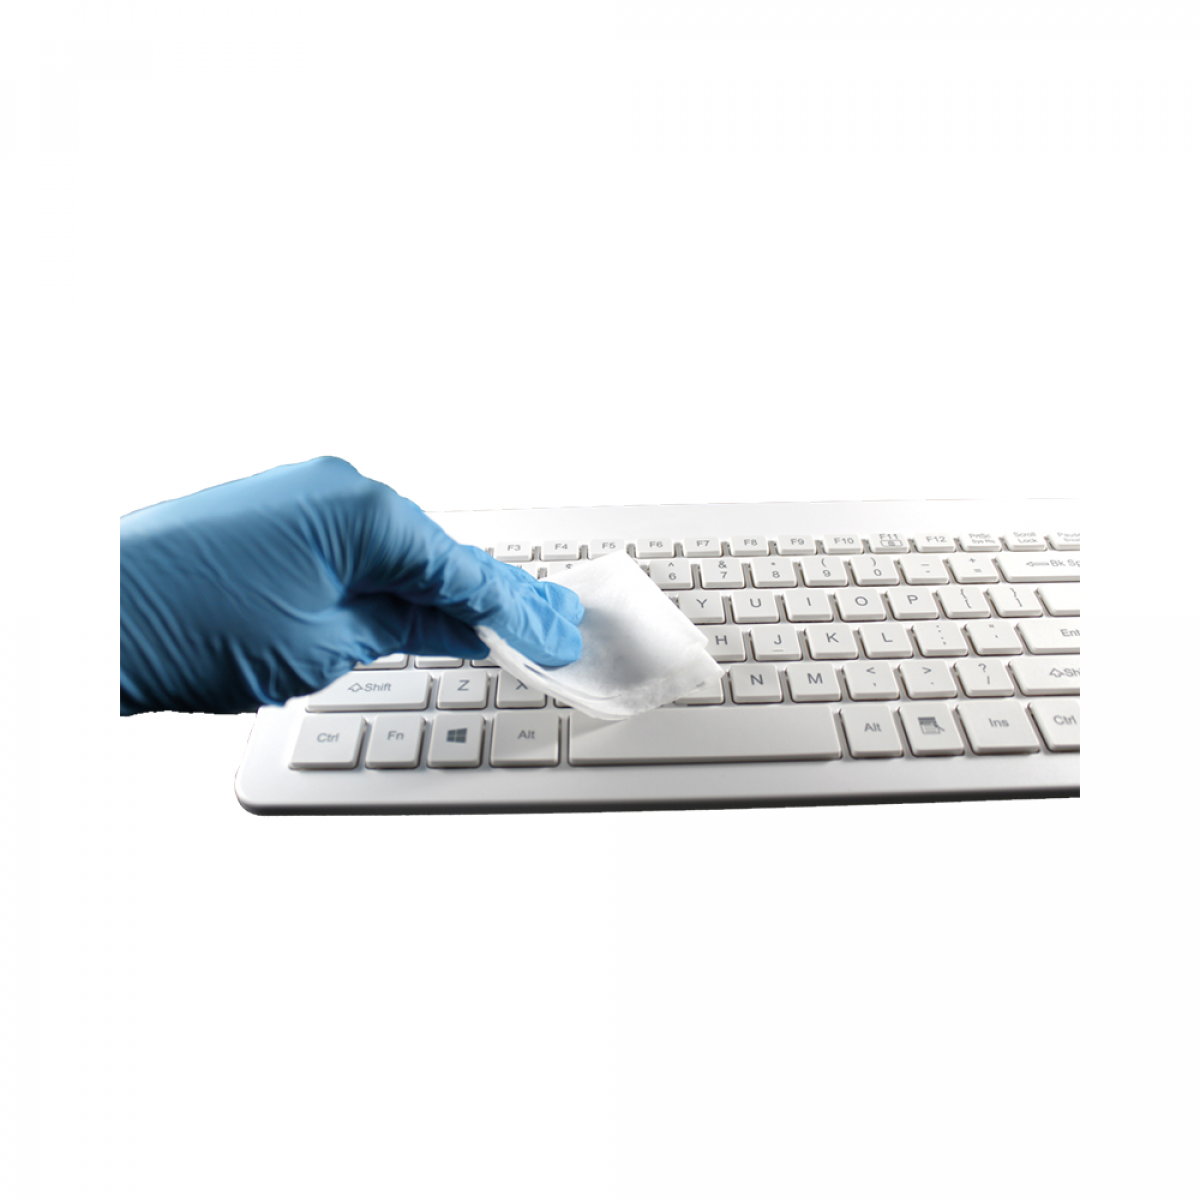 Easy to clean medical keyboard | Man & Machine | Very Cool Keyboard